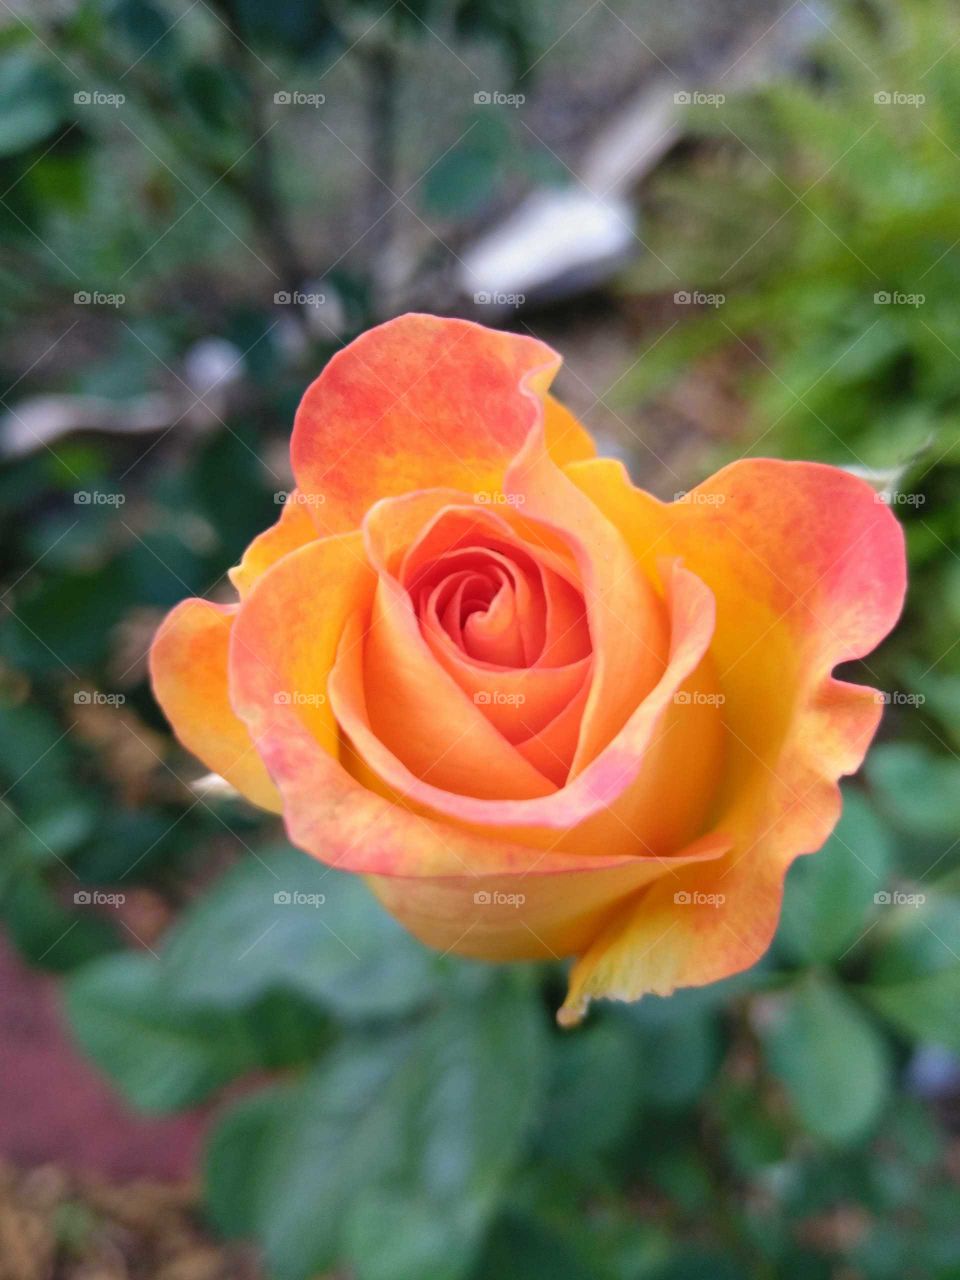 hybrid rose